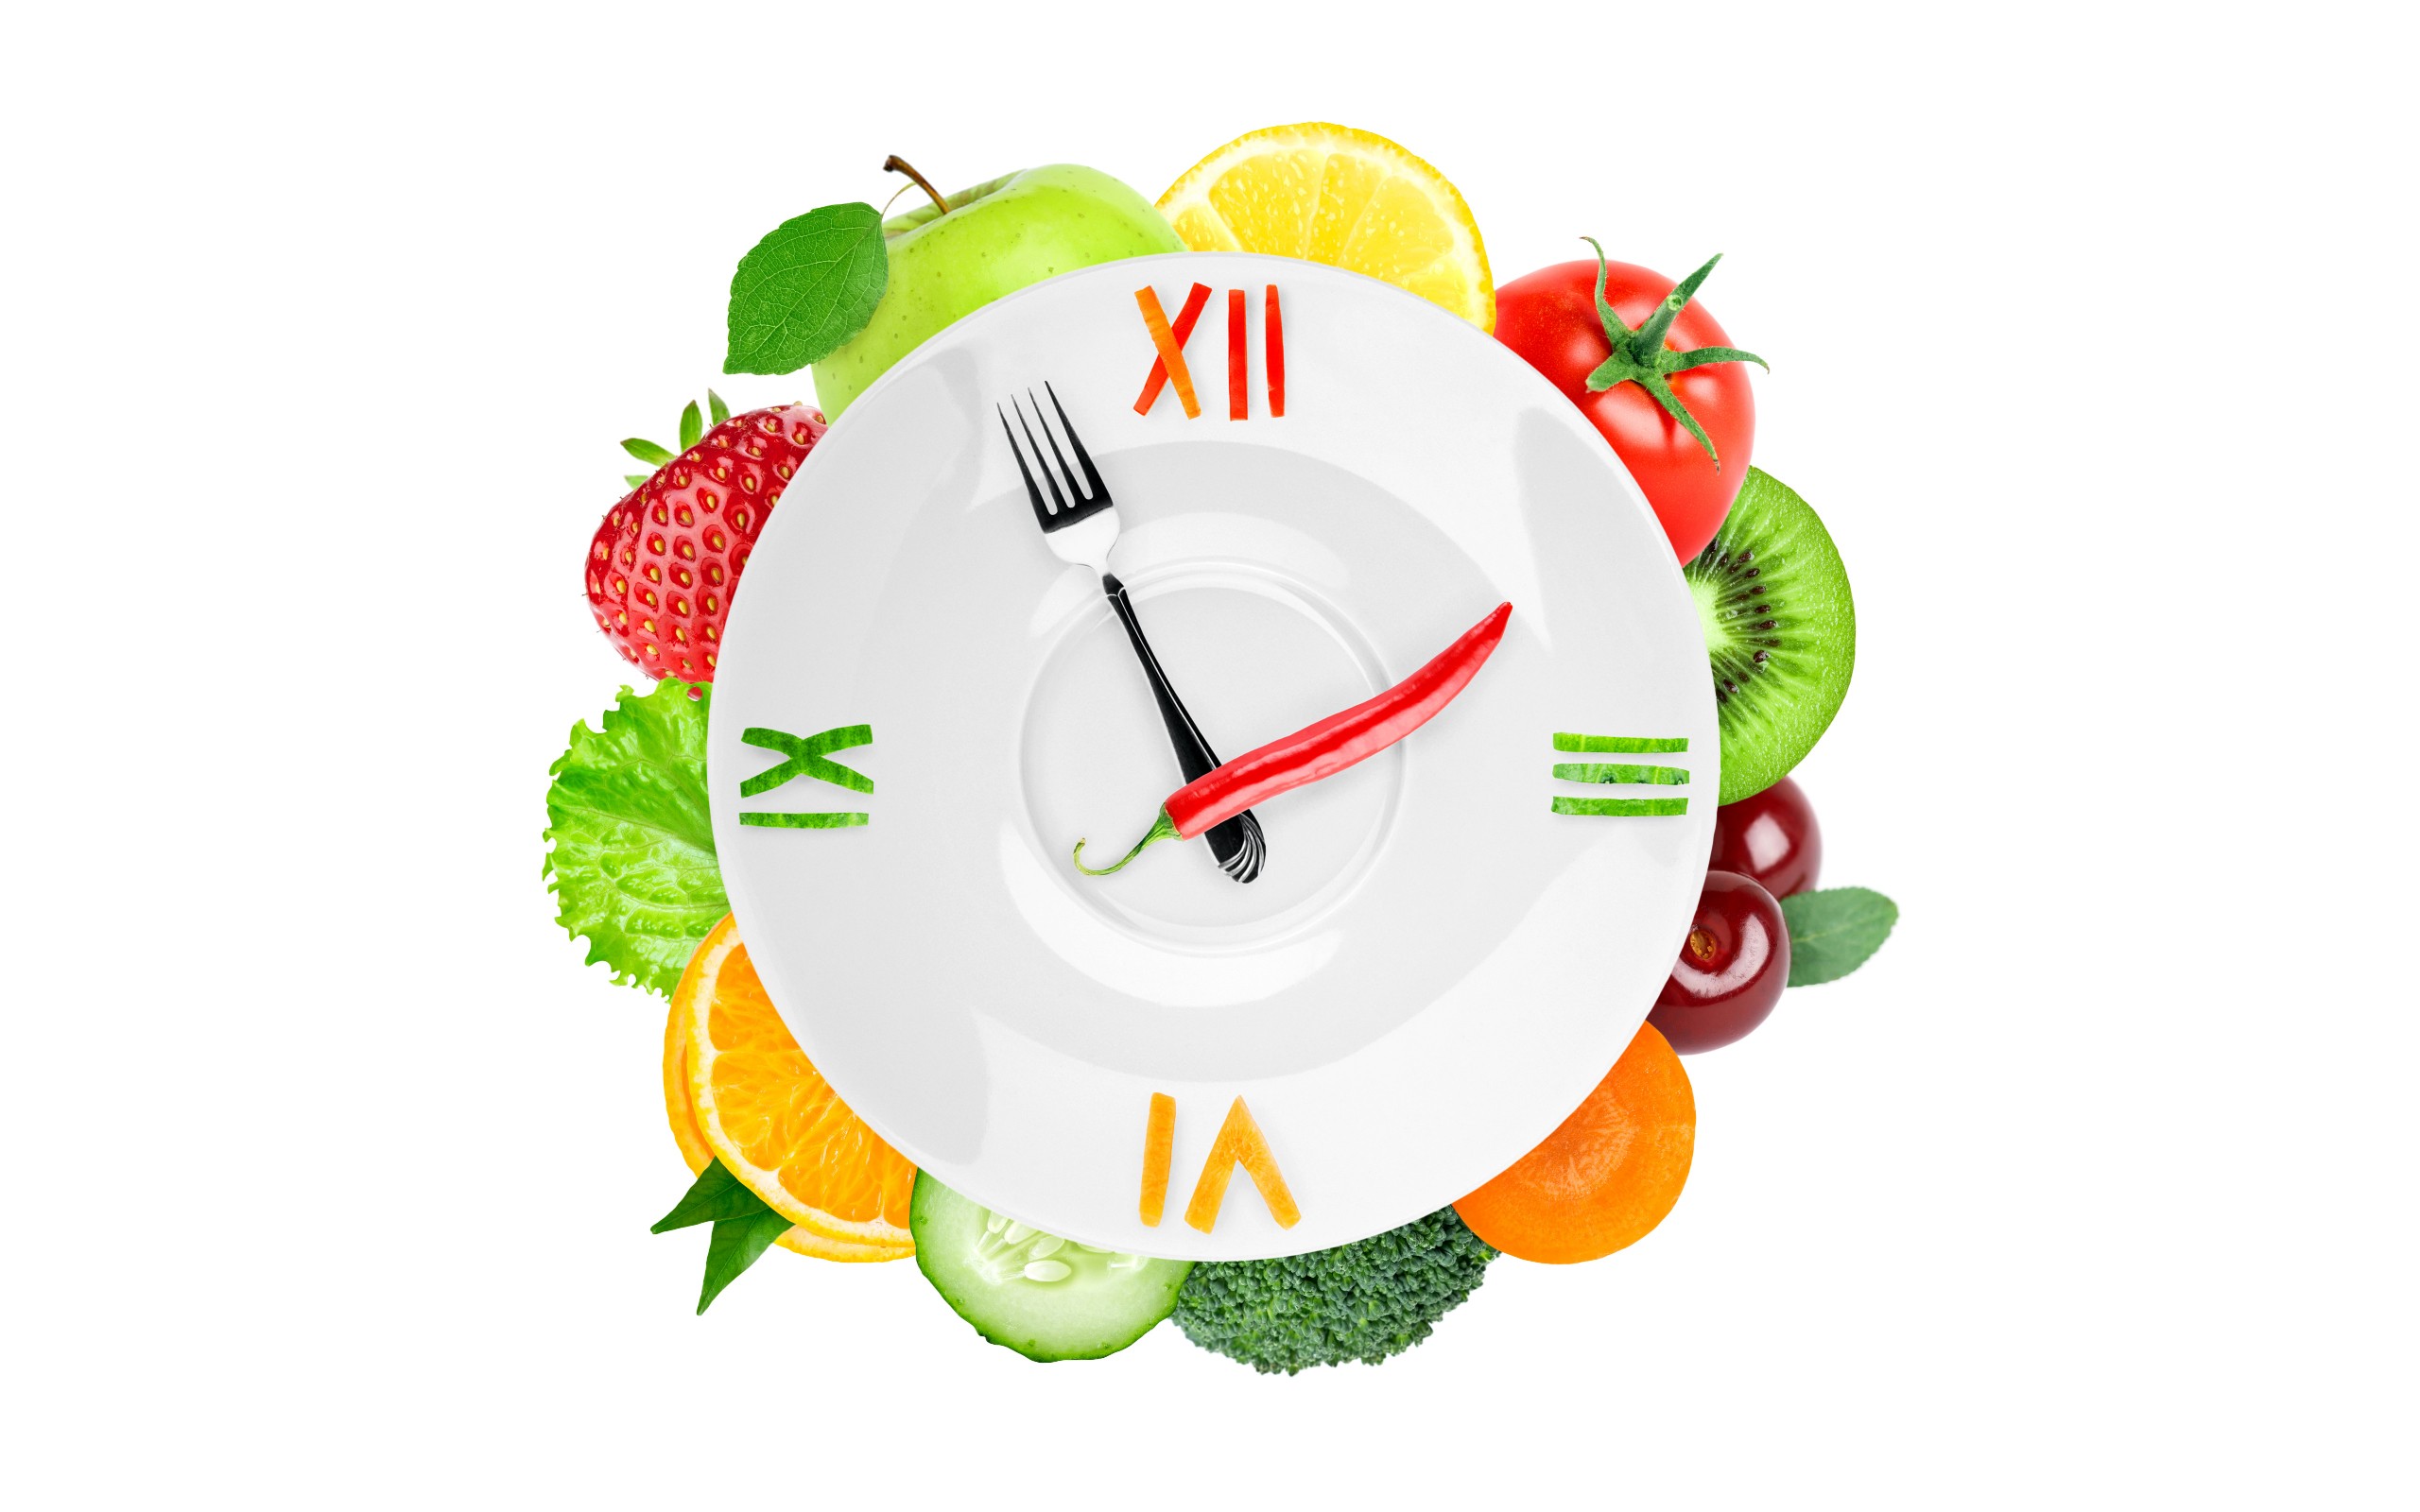 General 2560x1600 fruit food white background clocks vegetables plates fork chilli peppers